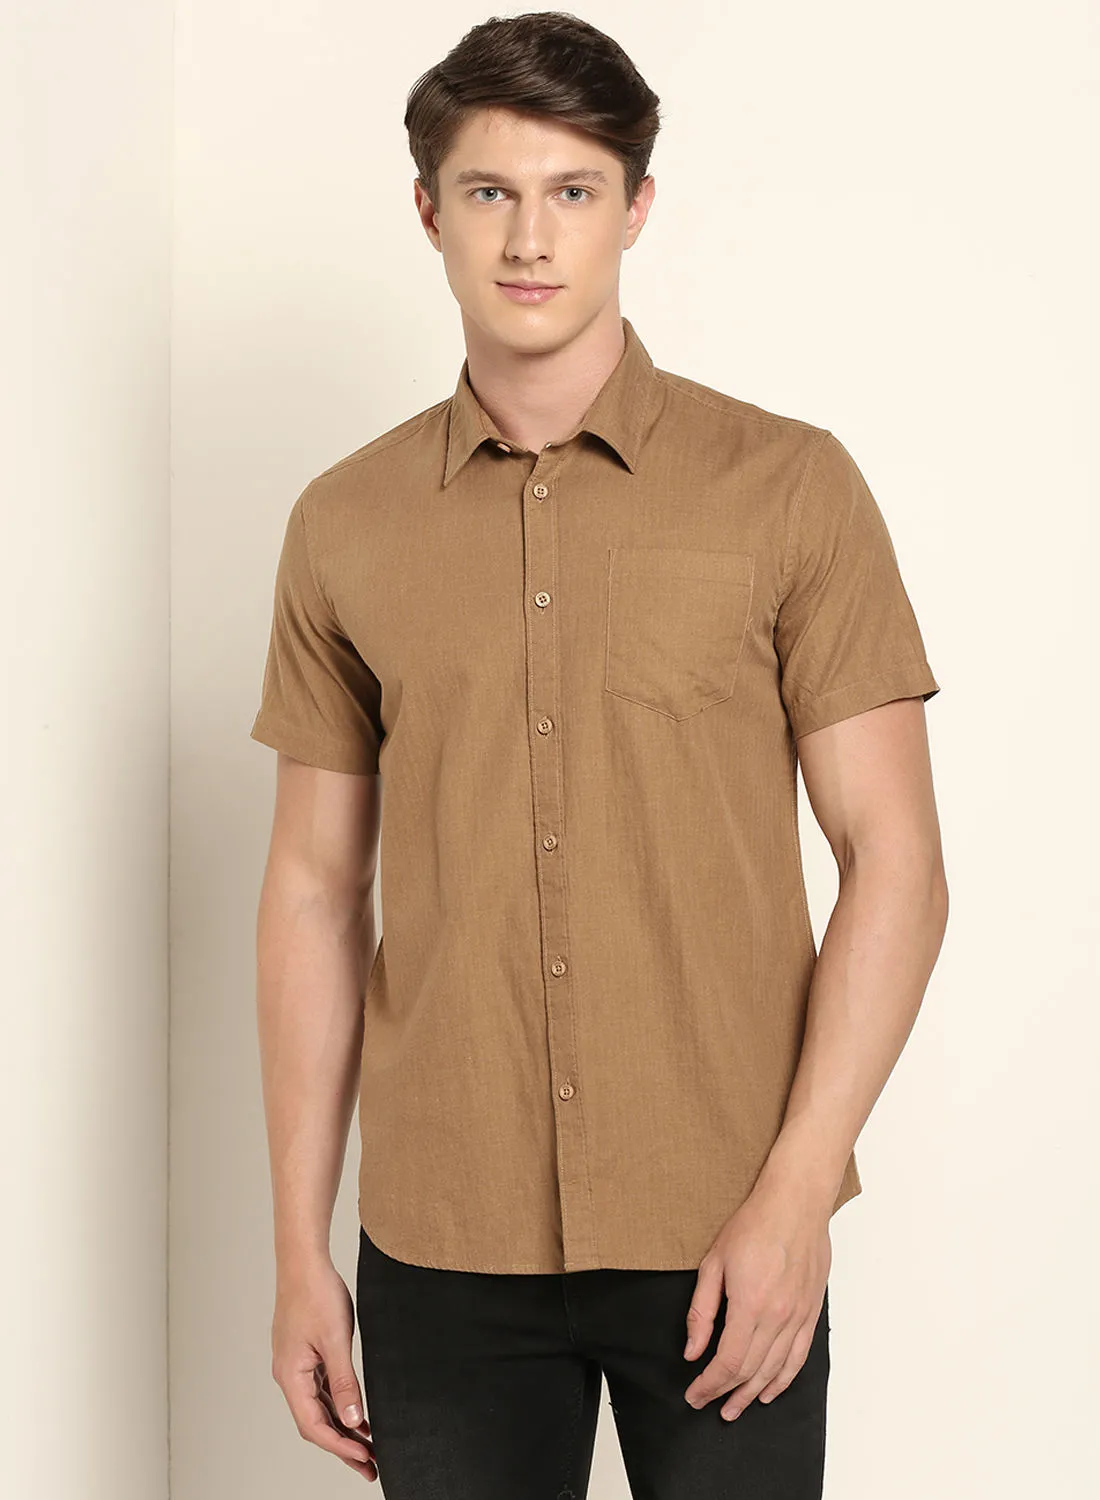 ABOF Plain Casual Collared Neck Regular Fit Short Sleeve Shirt Tortilla Brown